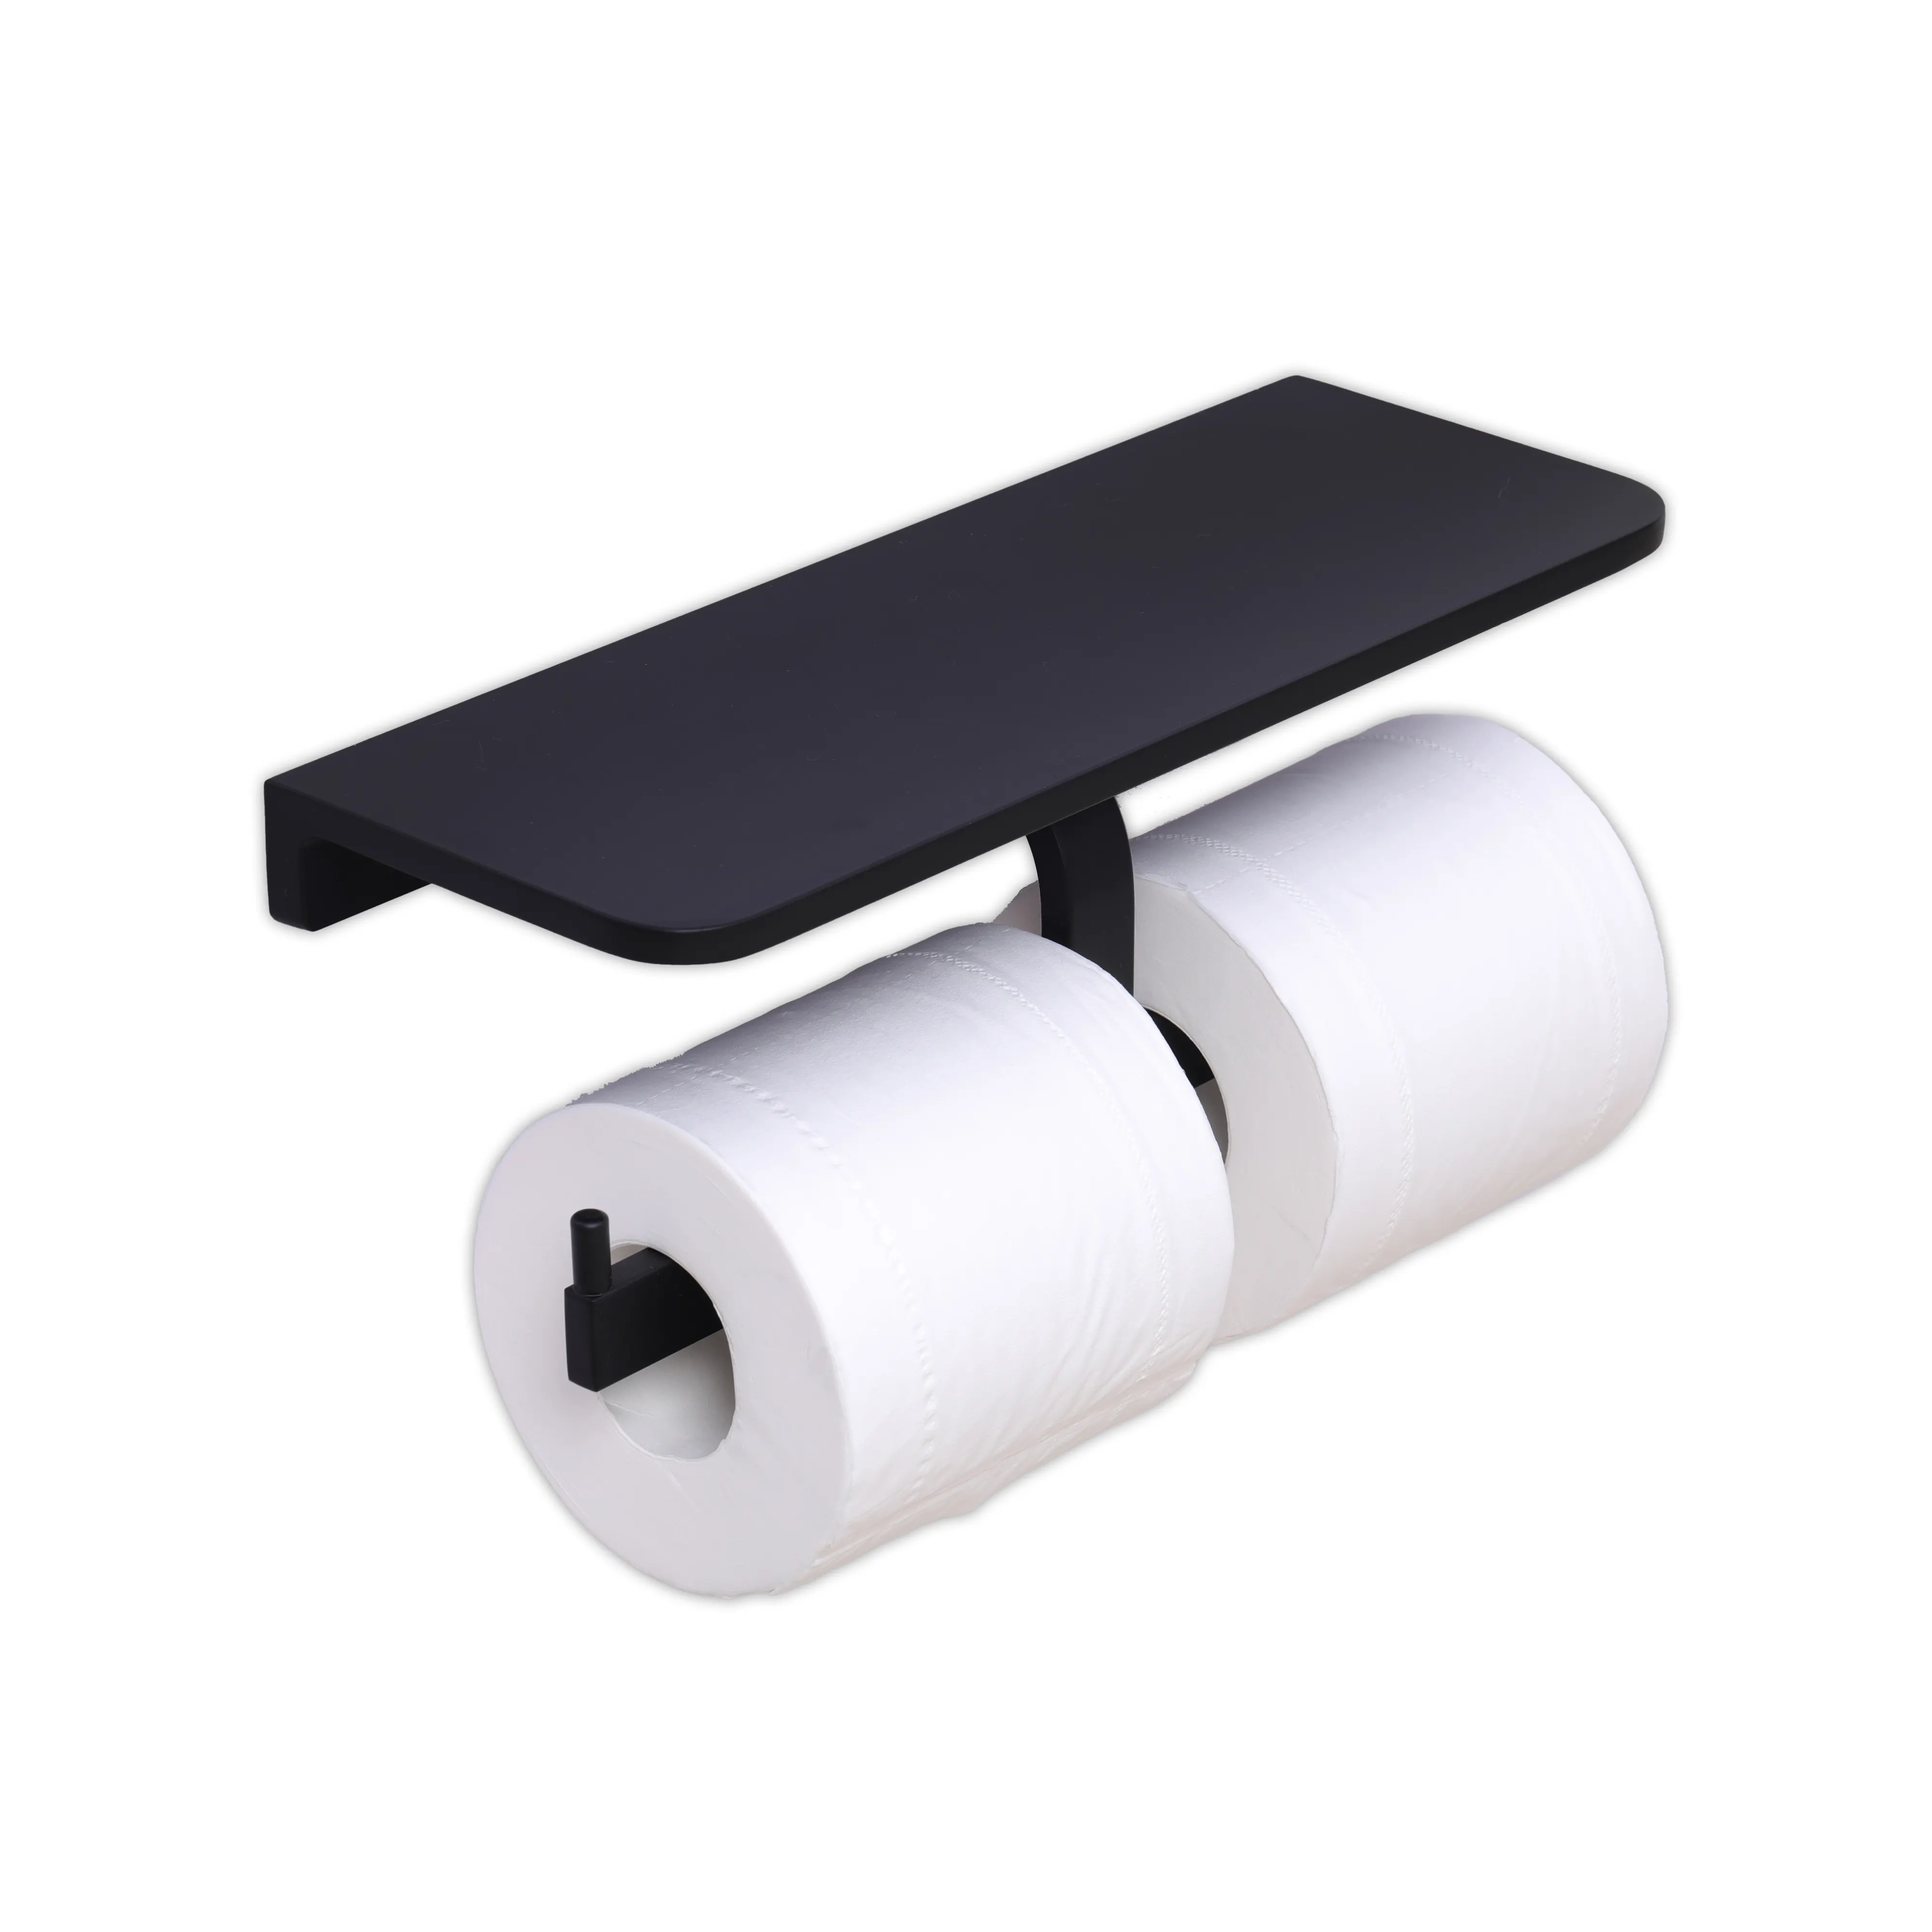 Aluminum Industrial Wall Mount Tissue Holder Black Bathroom Stainless Steel Toilet Paper Holder With Phone Shelf